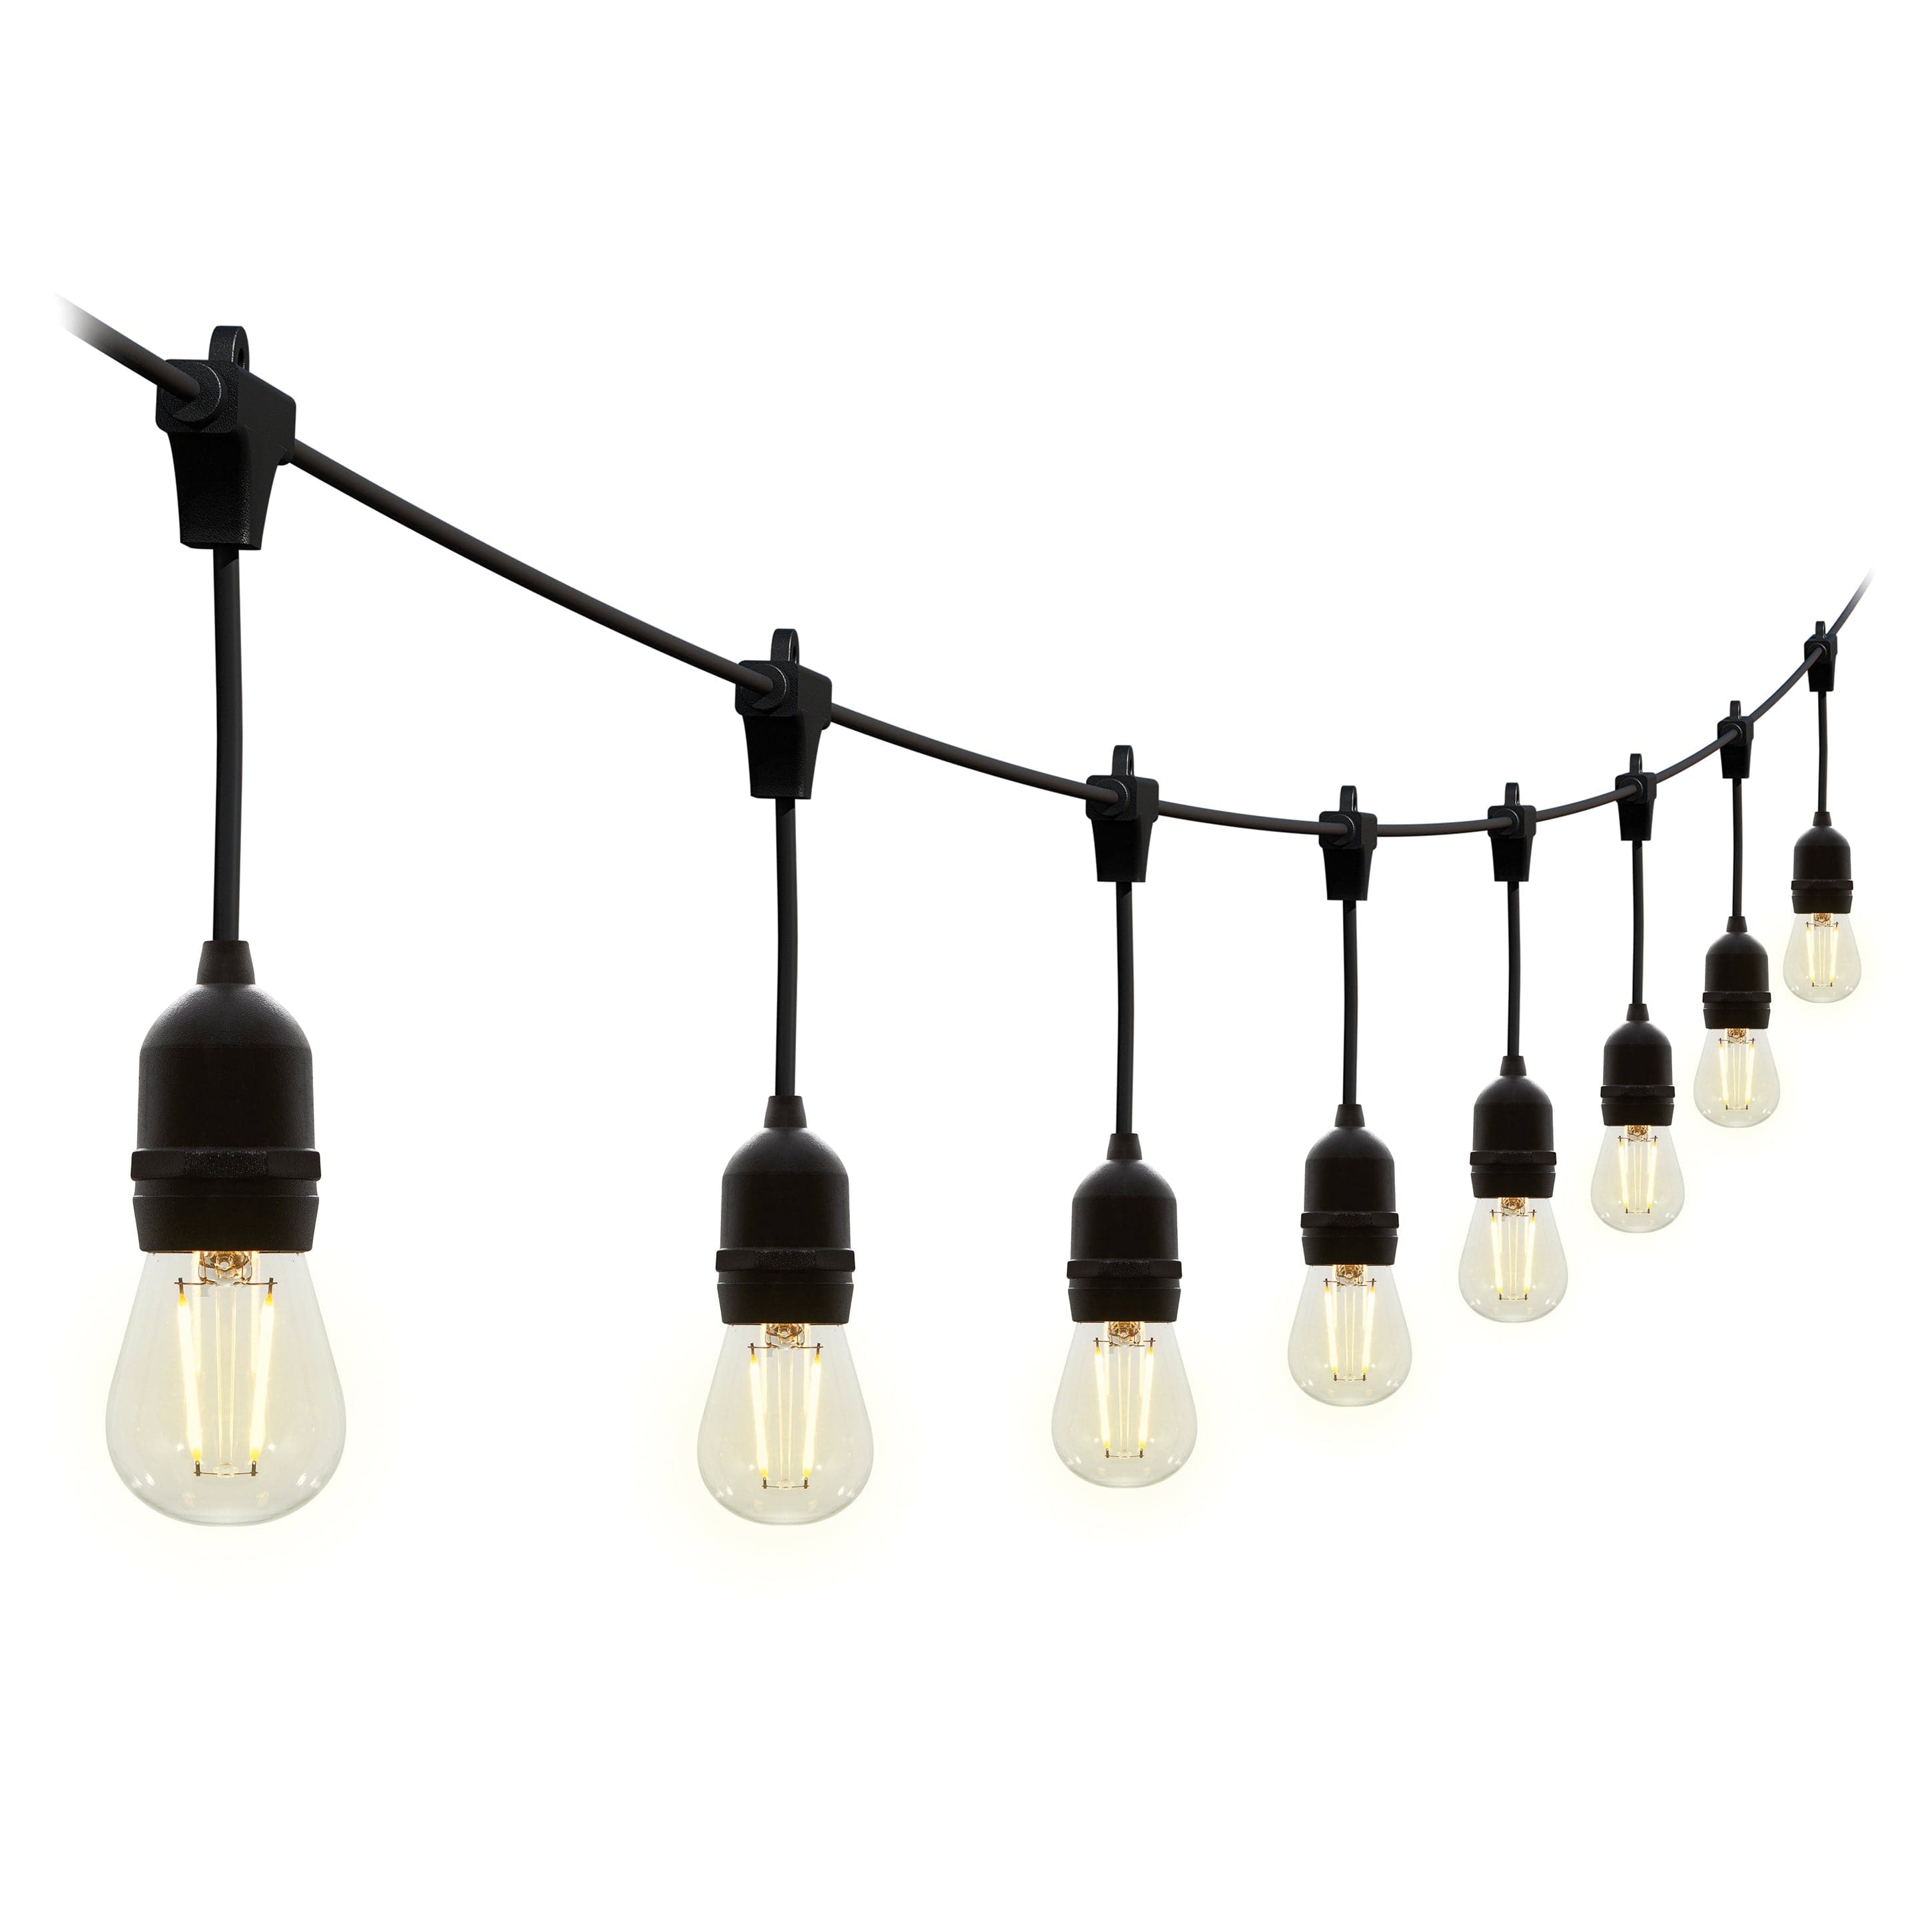 4lite Festoon Lighting Outdoor String Lamps with E27 Screw Warm White LED Bulbs